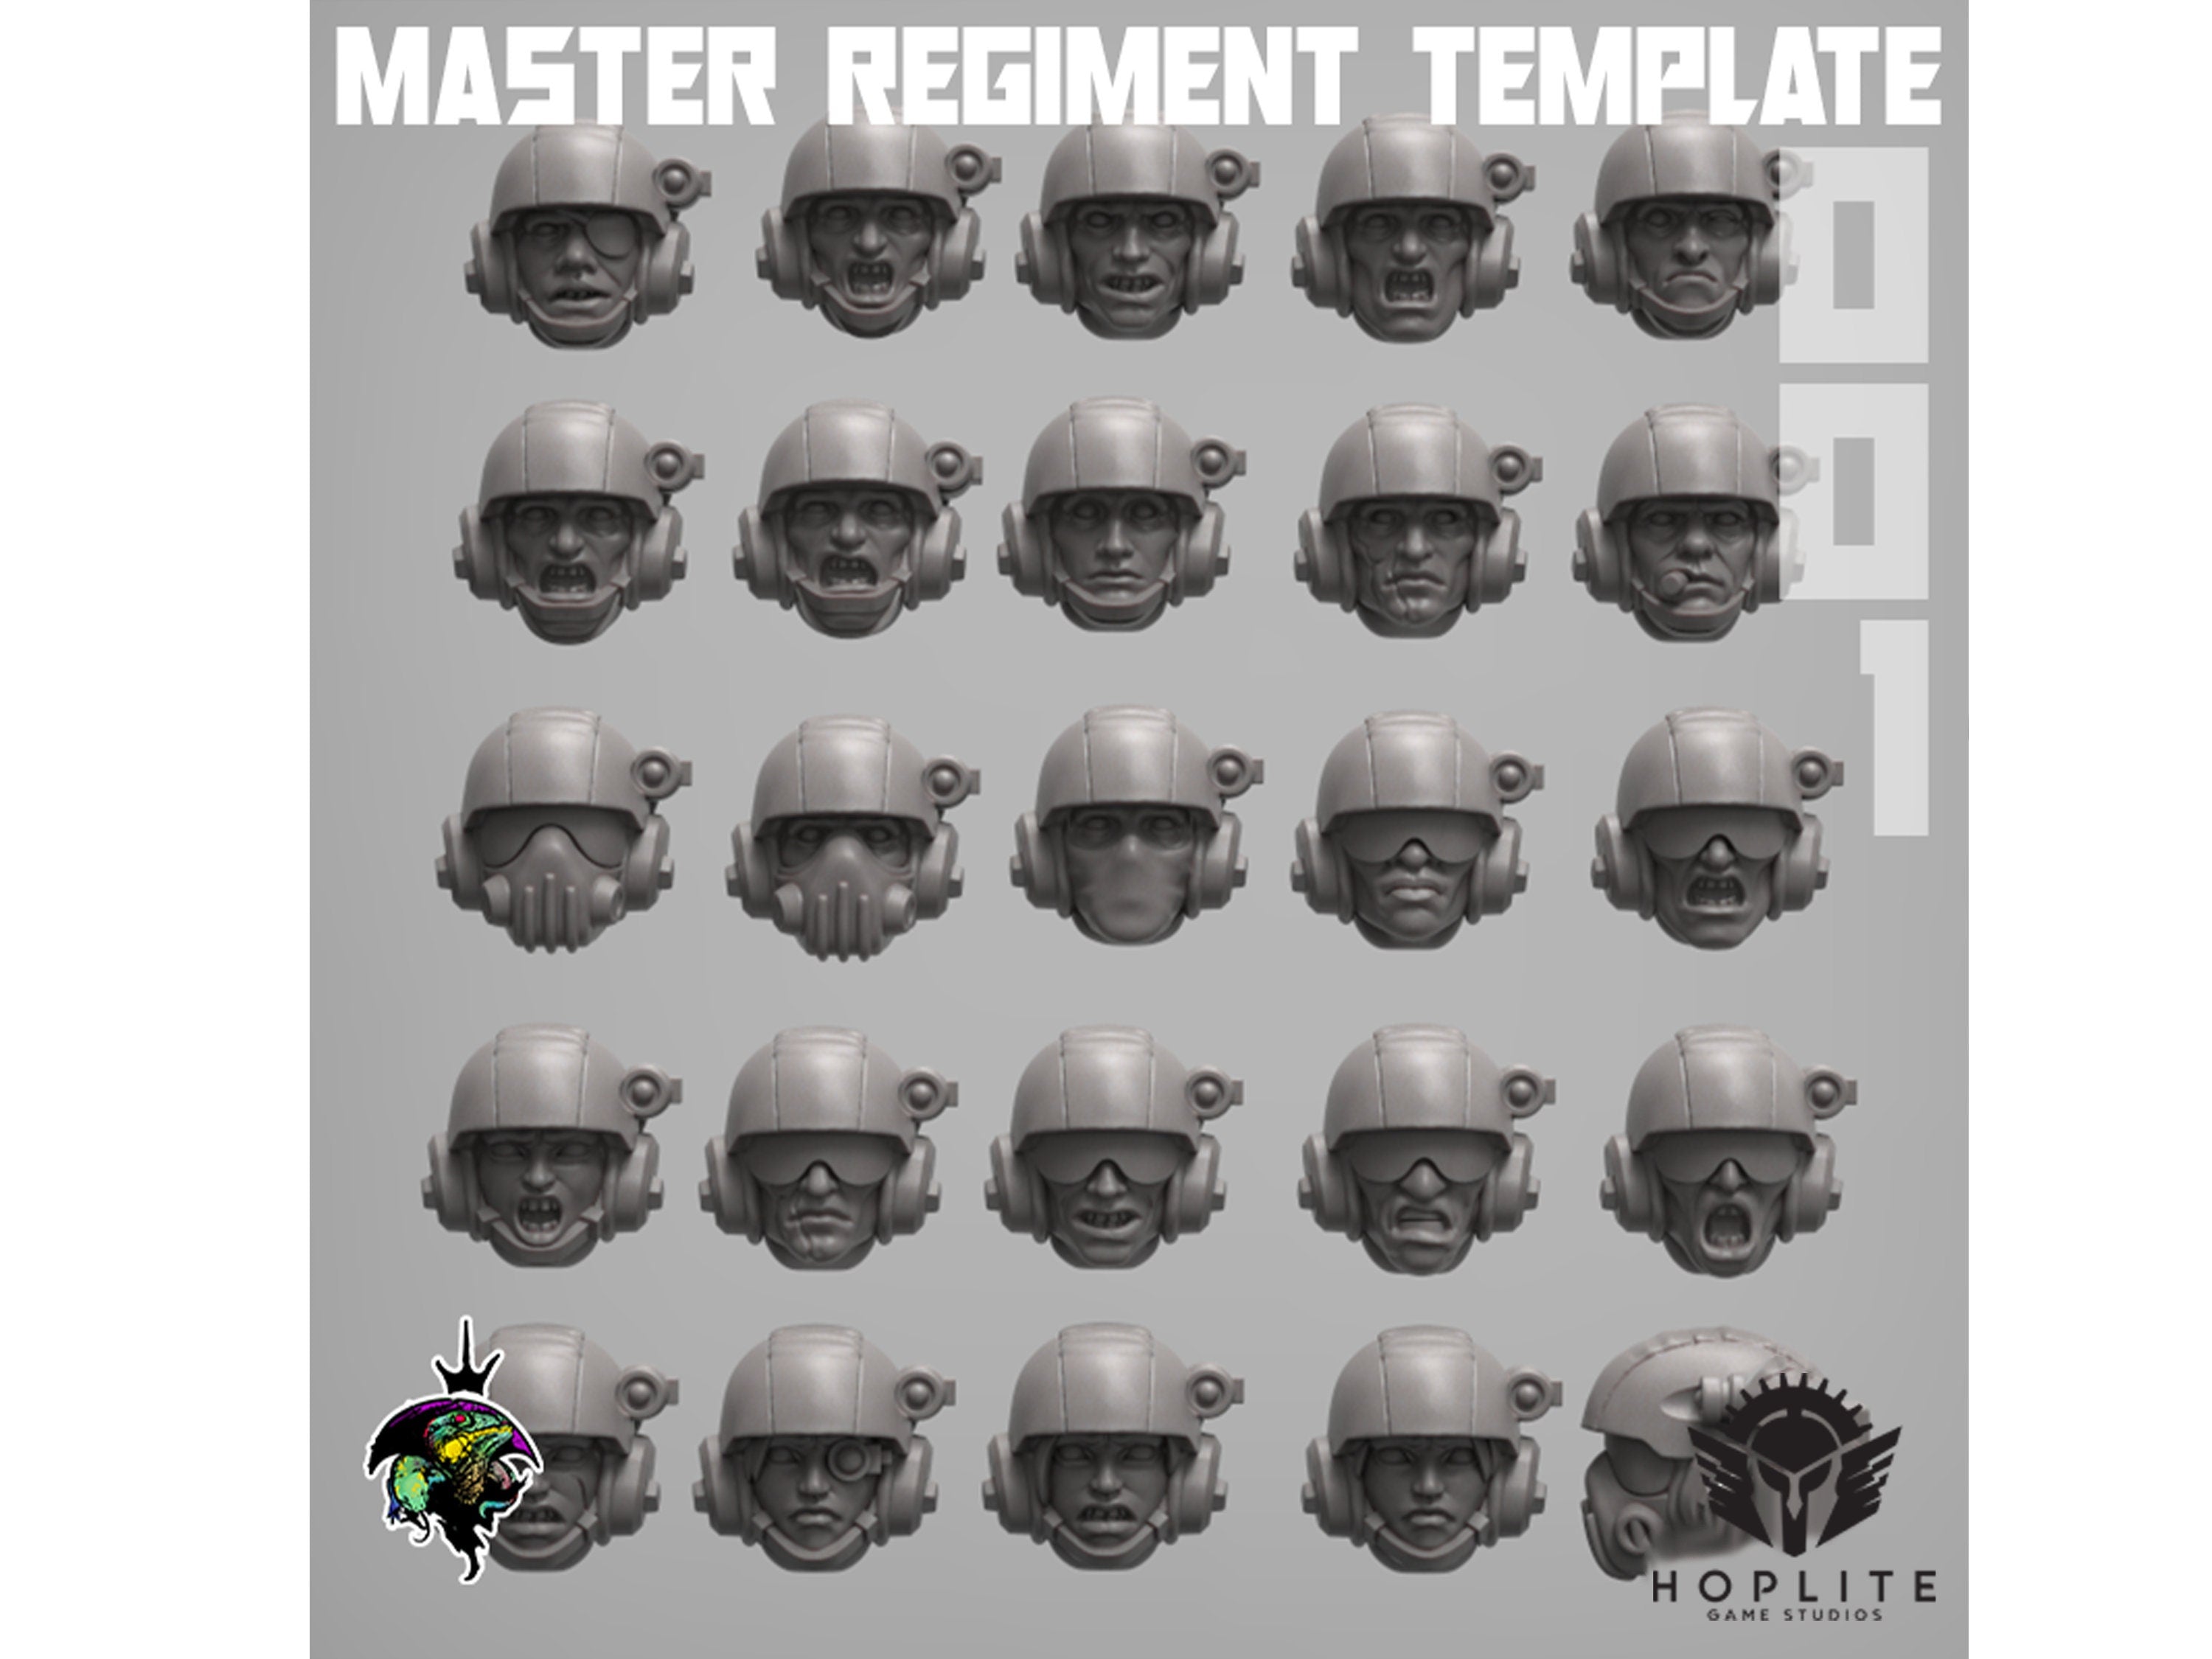 master chief helmet blueprints